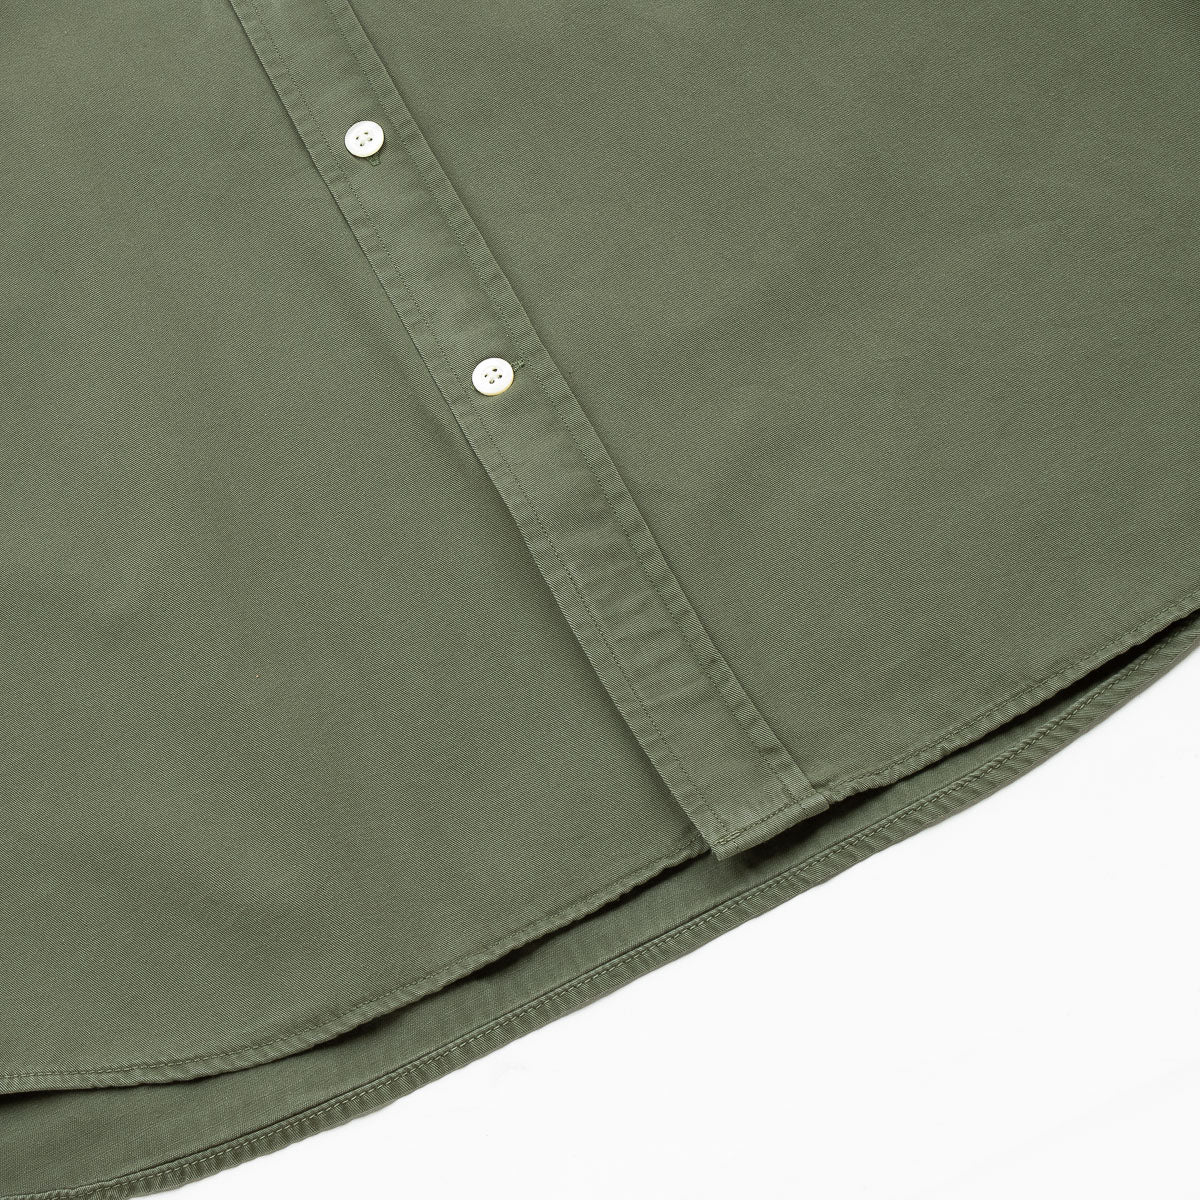 Anton Light Twill Shirt - Spruce Green